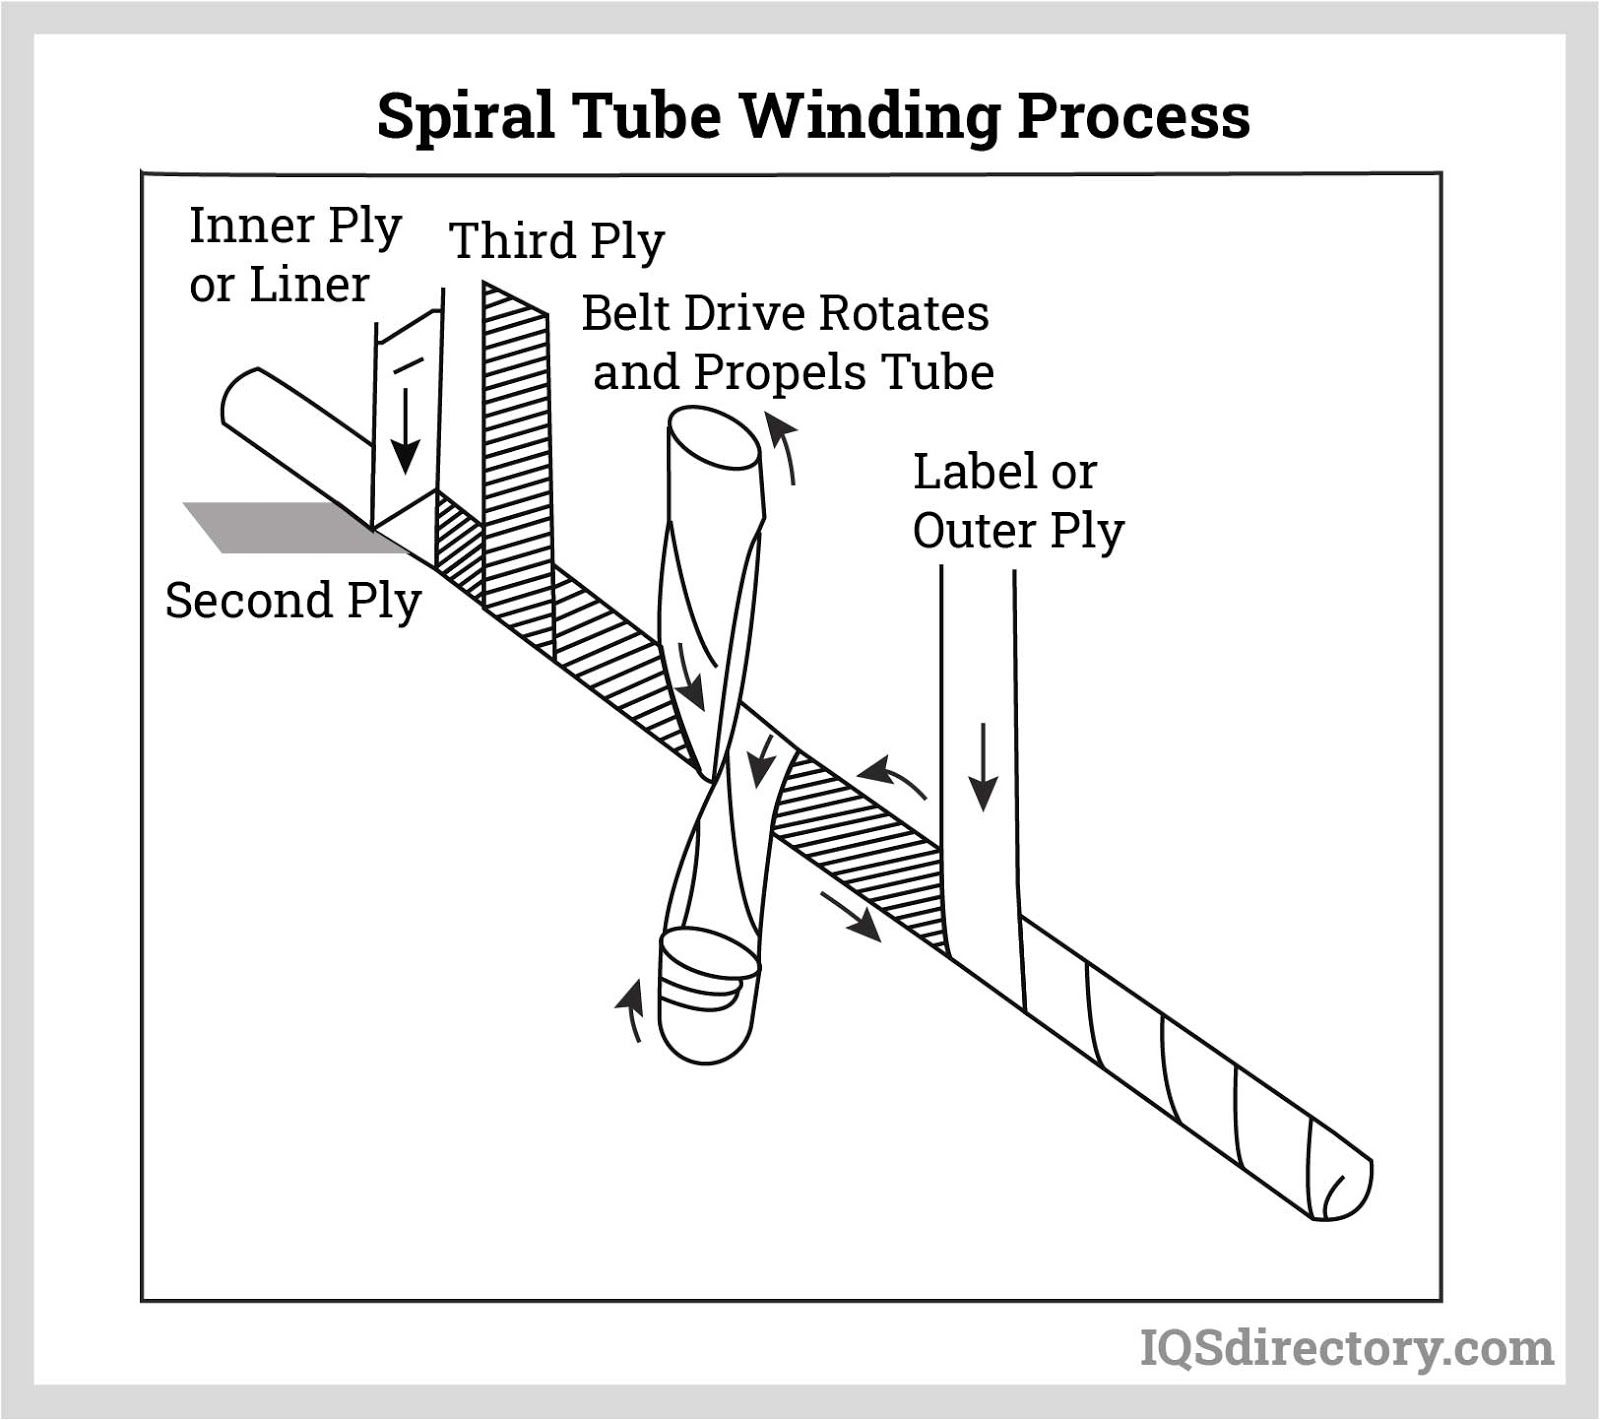 Spiral Tube Winding Process